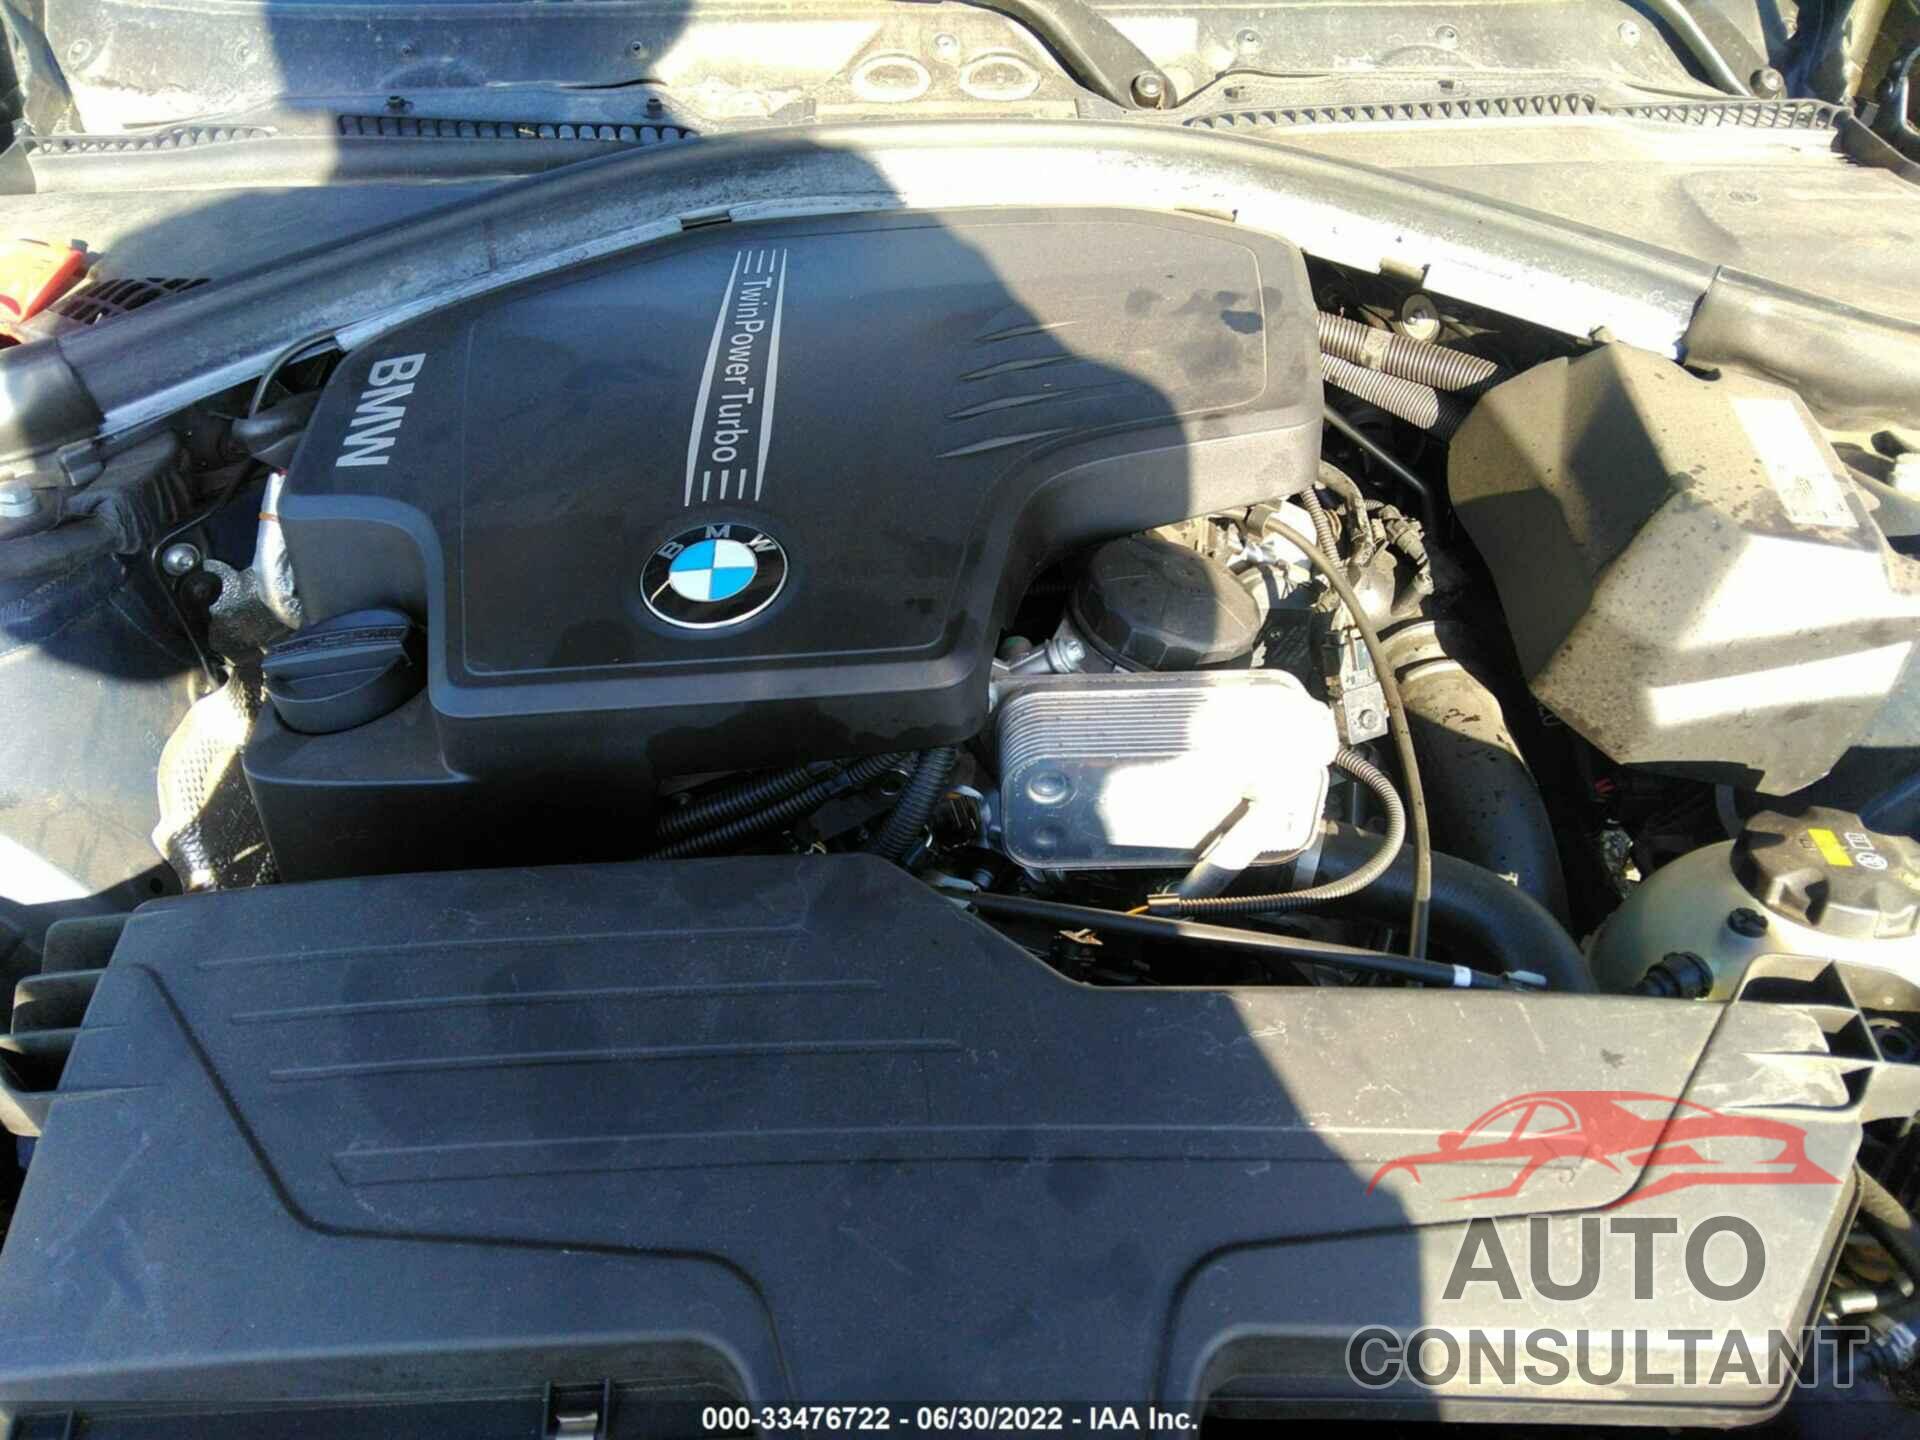 BMW 4 SERIES 2014 - WBA3V7C57EP770903